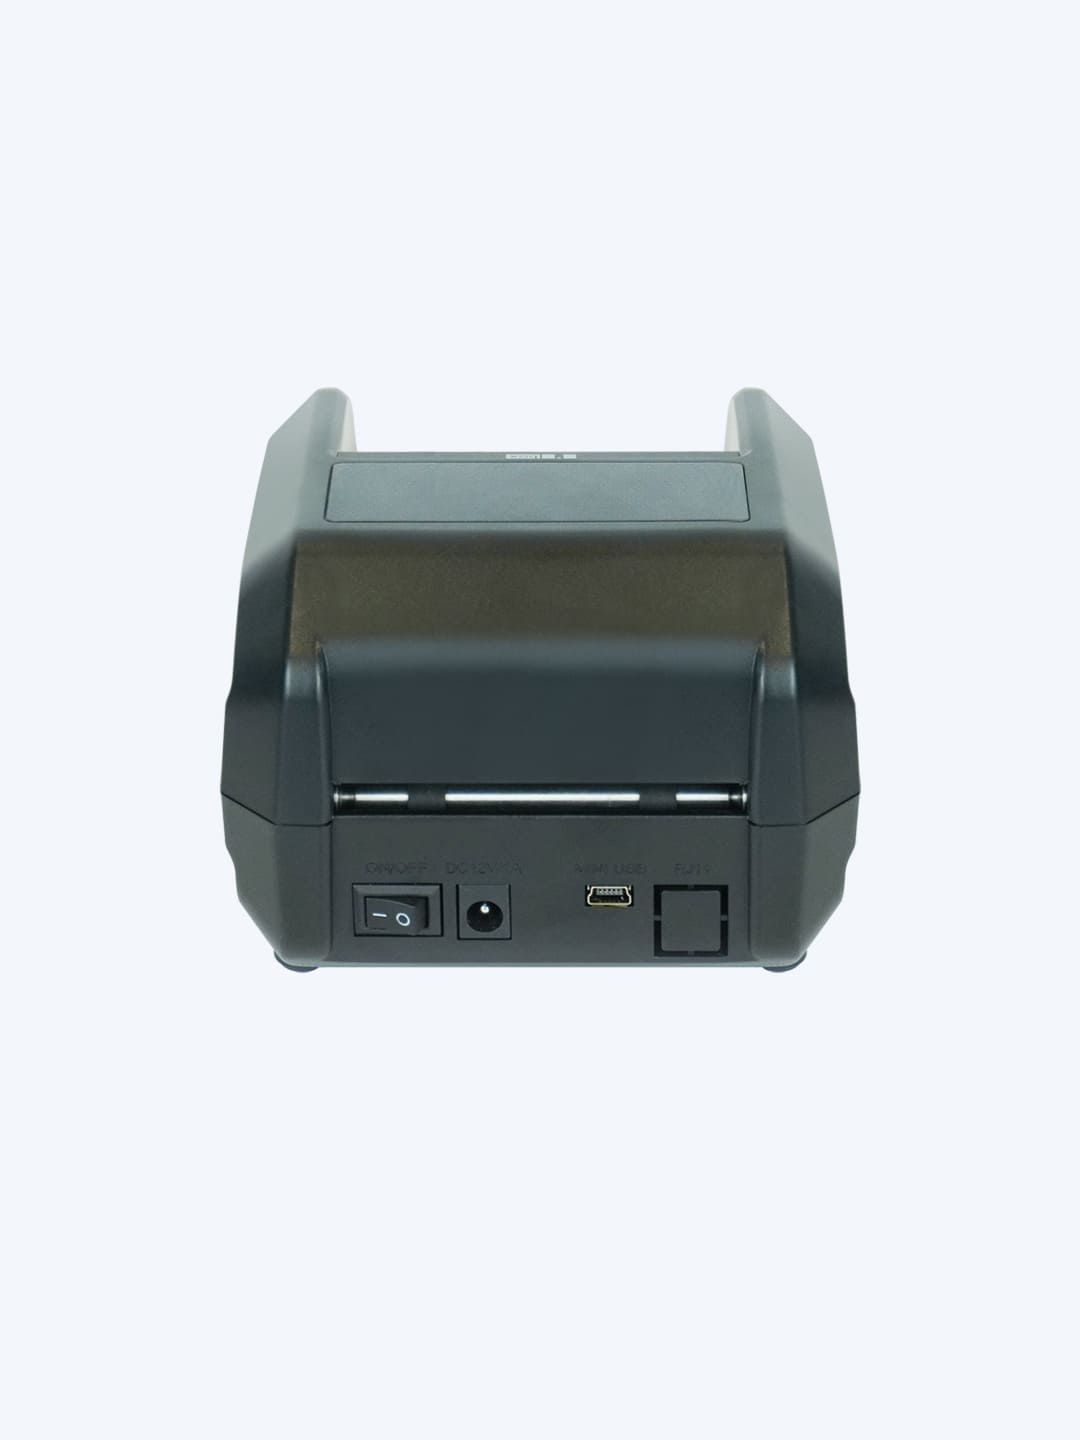 Автоматический детектор валют Mbox AMD-10S с аккумулятором